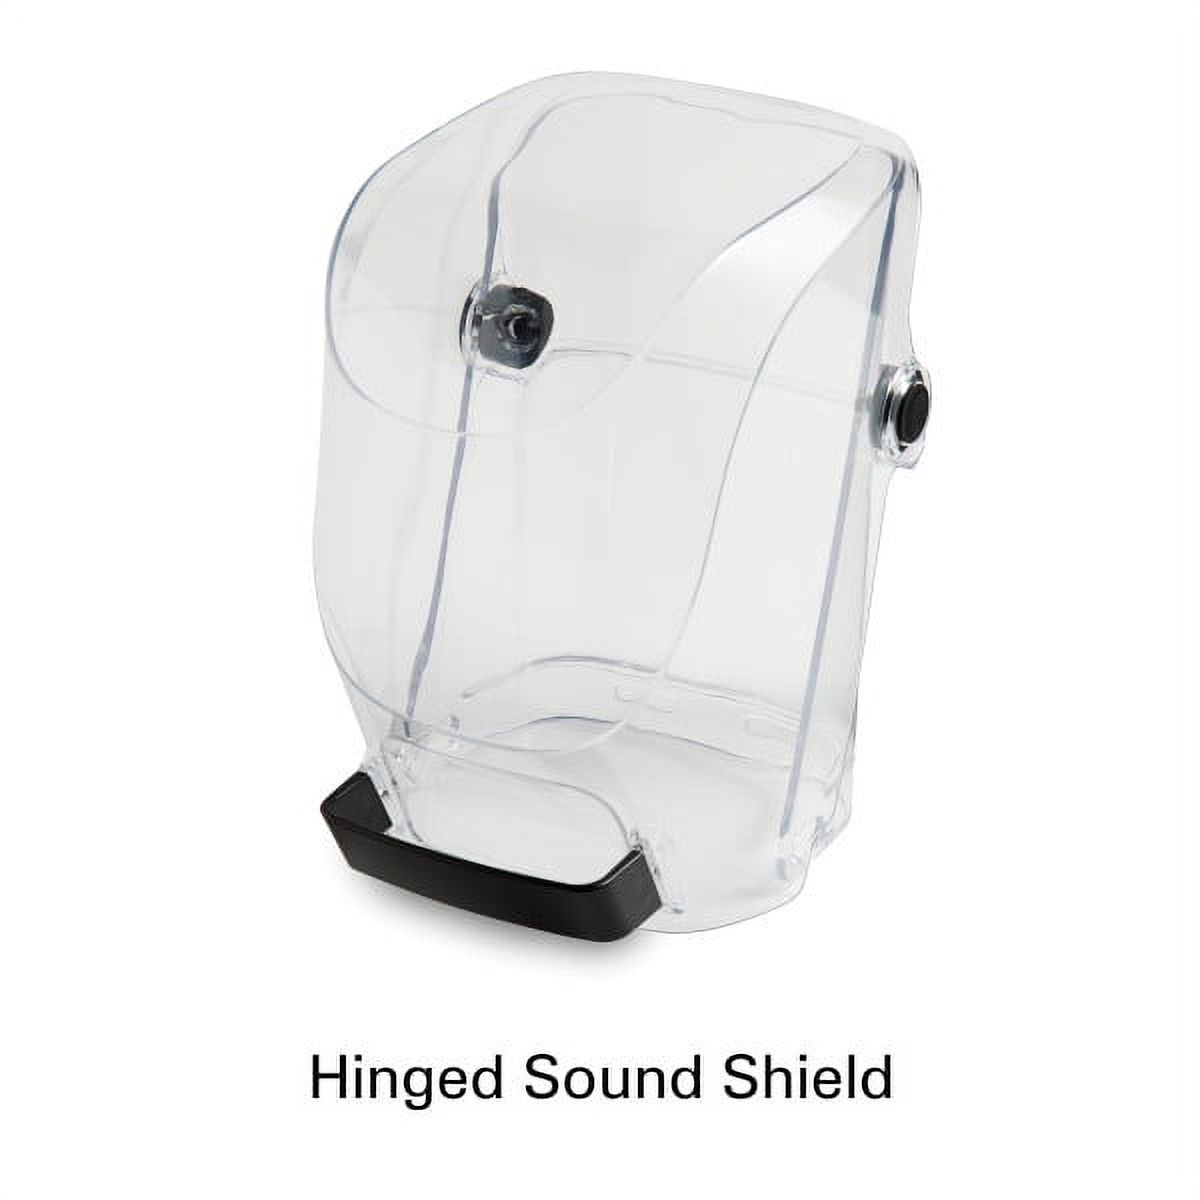 Hamilton Beach Sound Shield 950 Watt 52 oz Countertop Food Blender Mixer, Black - image 4 of 6